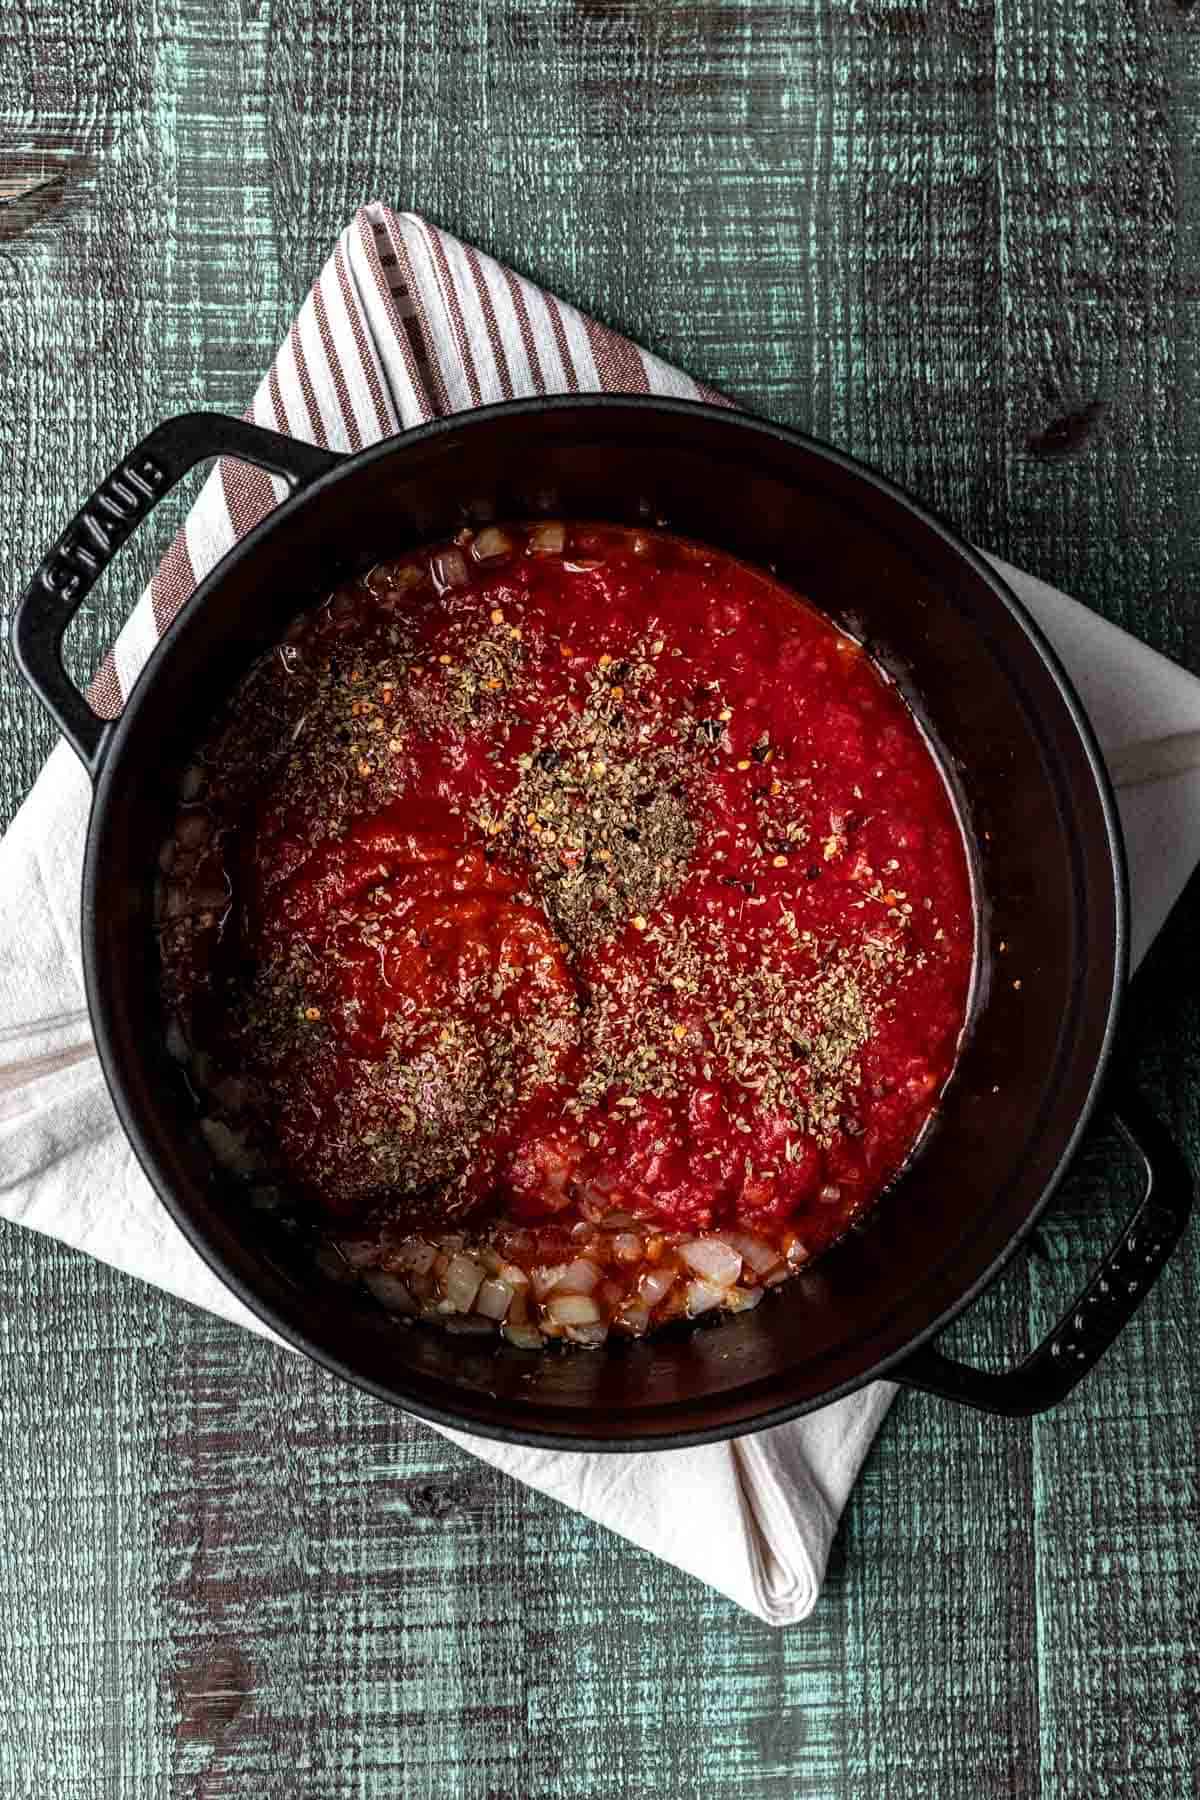 Tomato sauce seasoned with seasonings in a black pot.